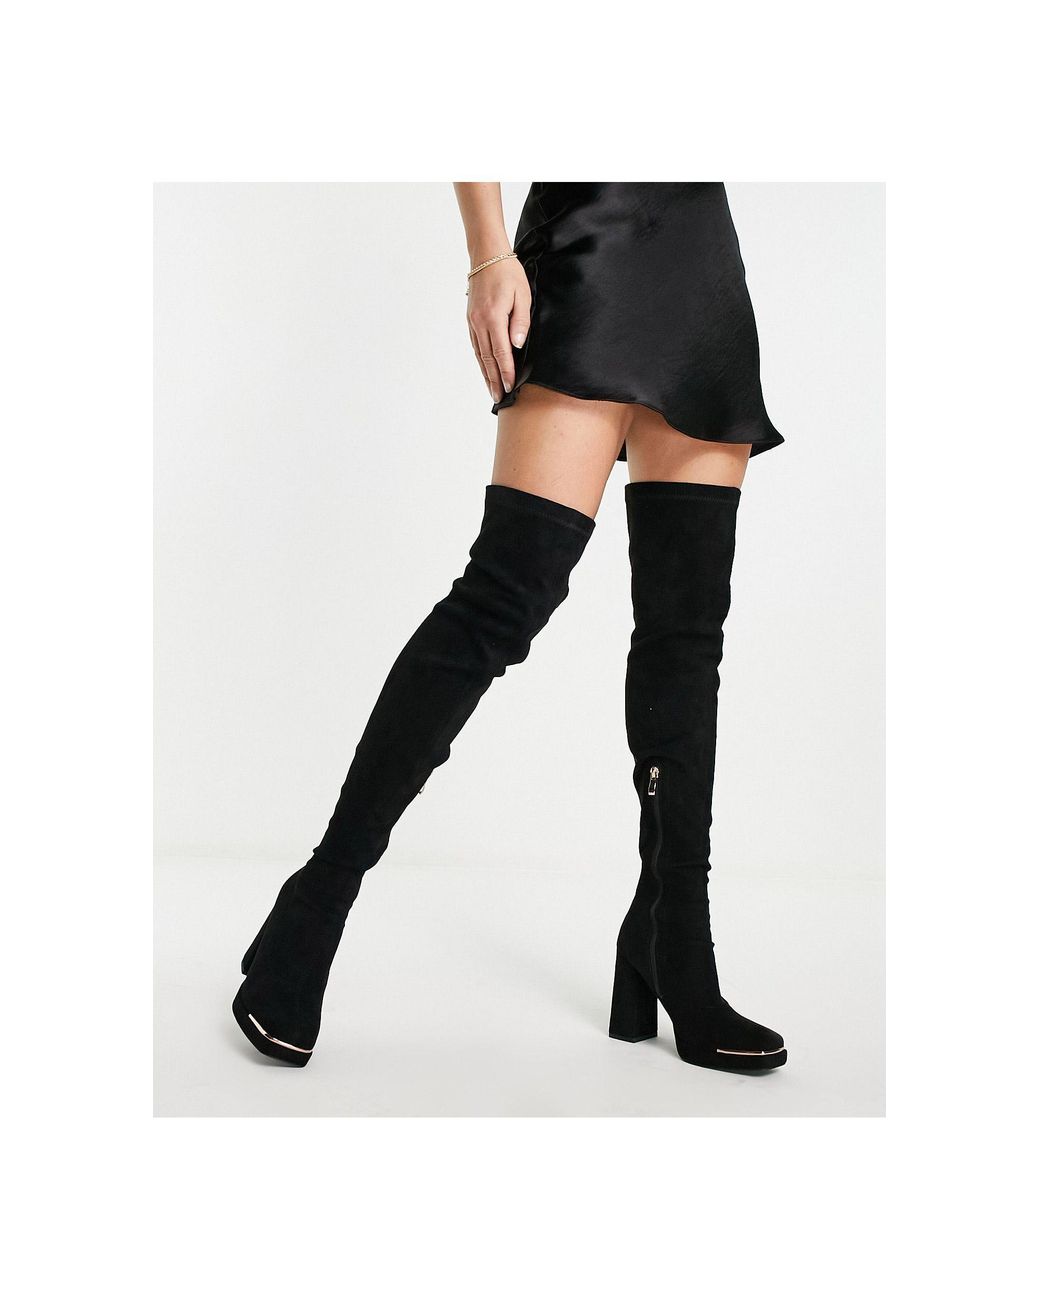 Annie Black Featured Zip Detail High Heel Ankle Boots | SIMMI London